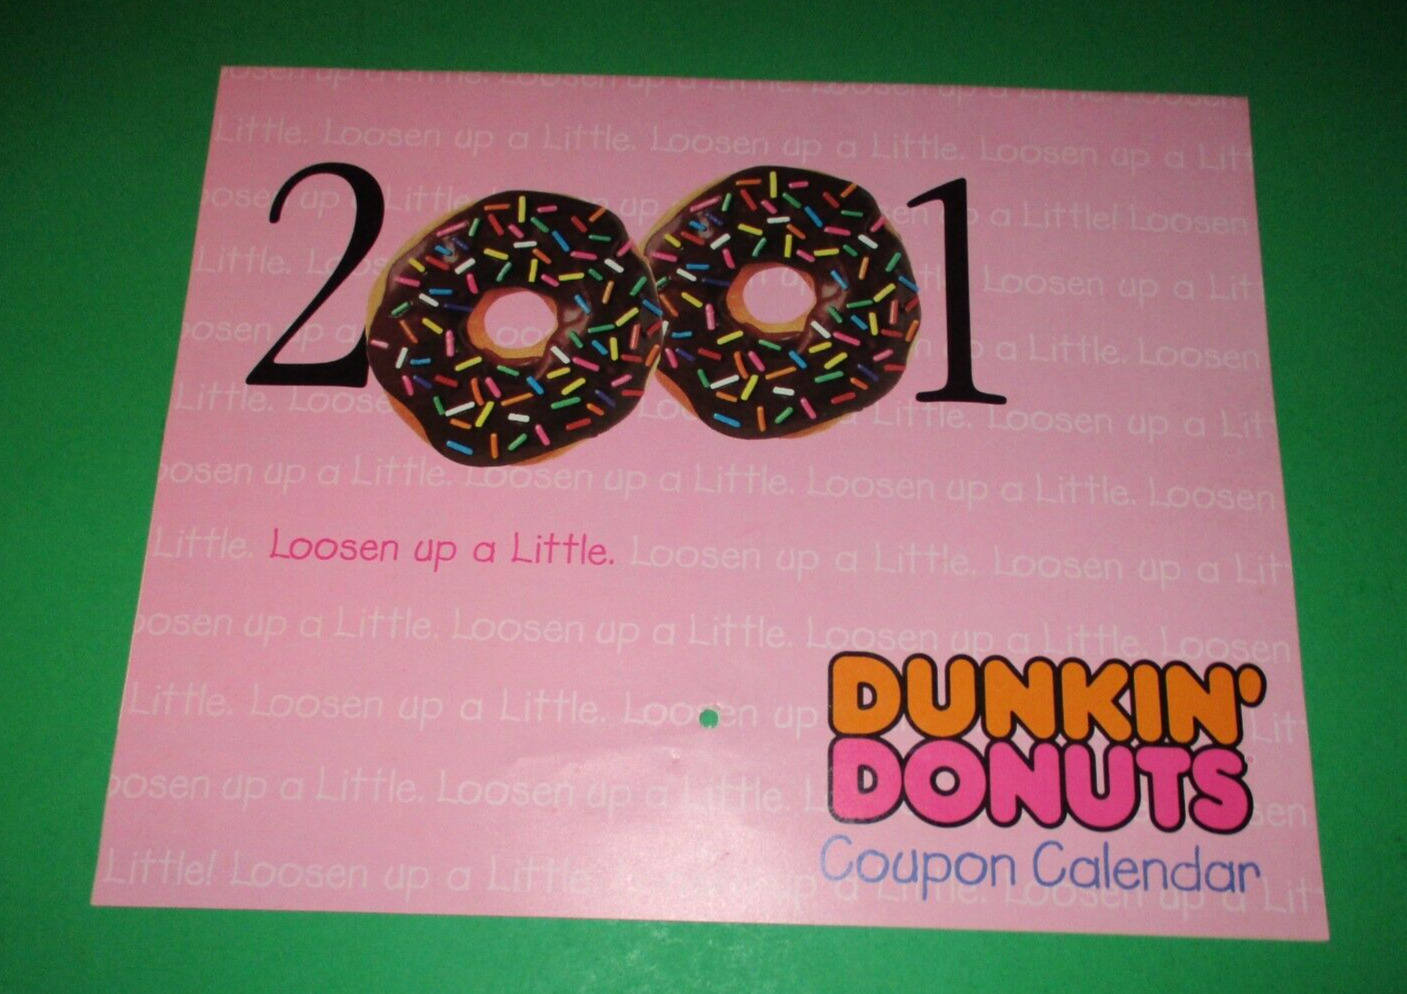 2001 Dunkin Donuts Wall Calendar 11 x 9 inches